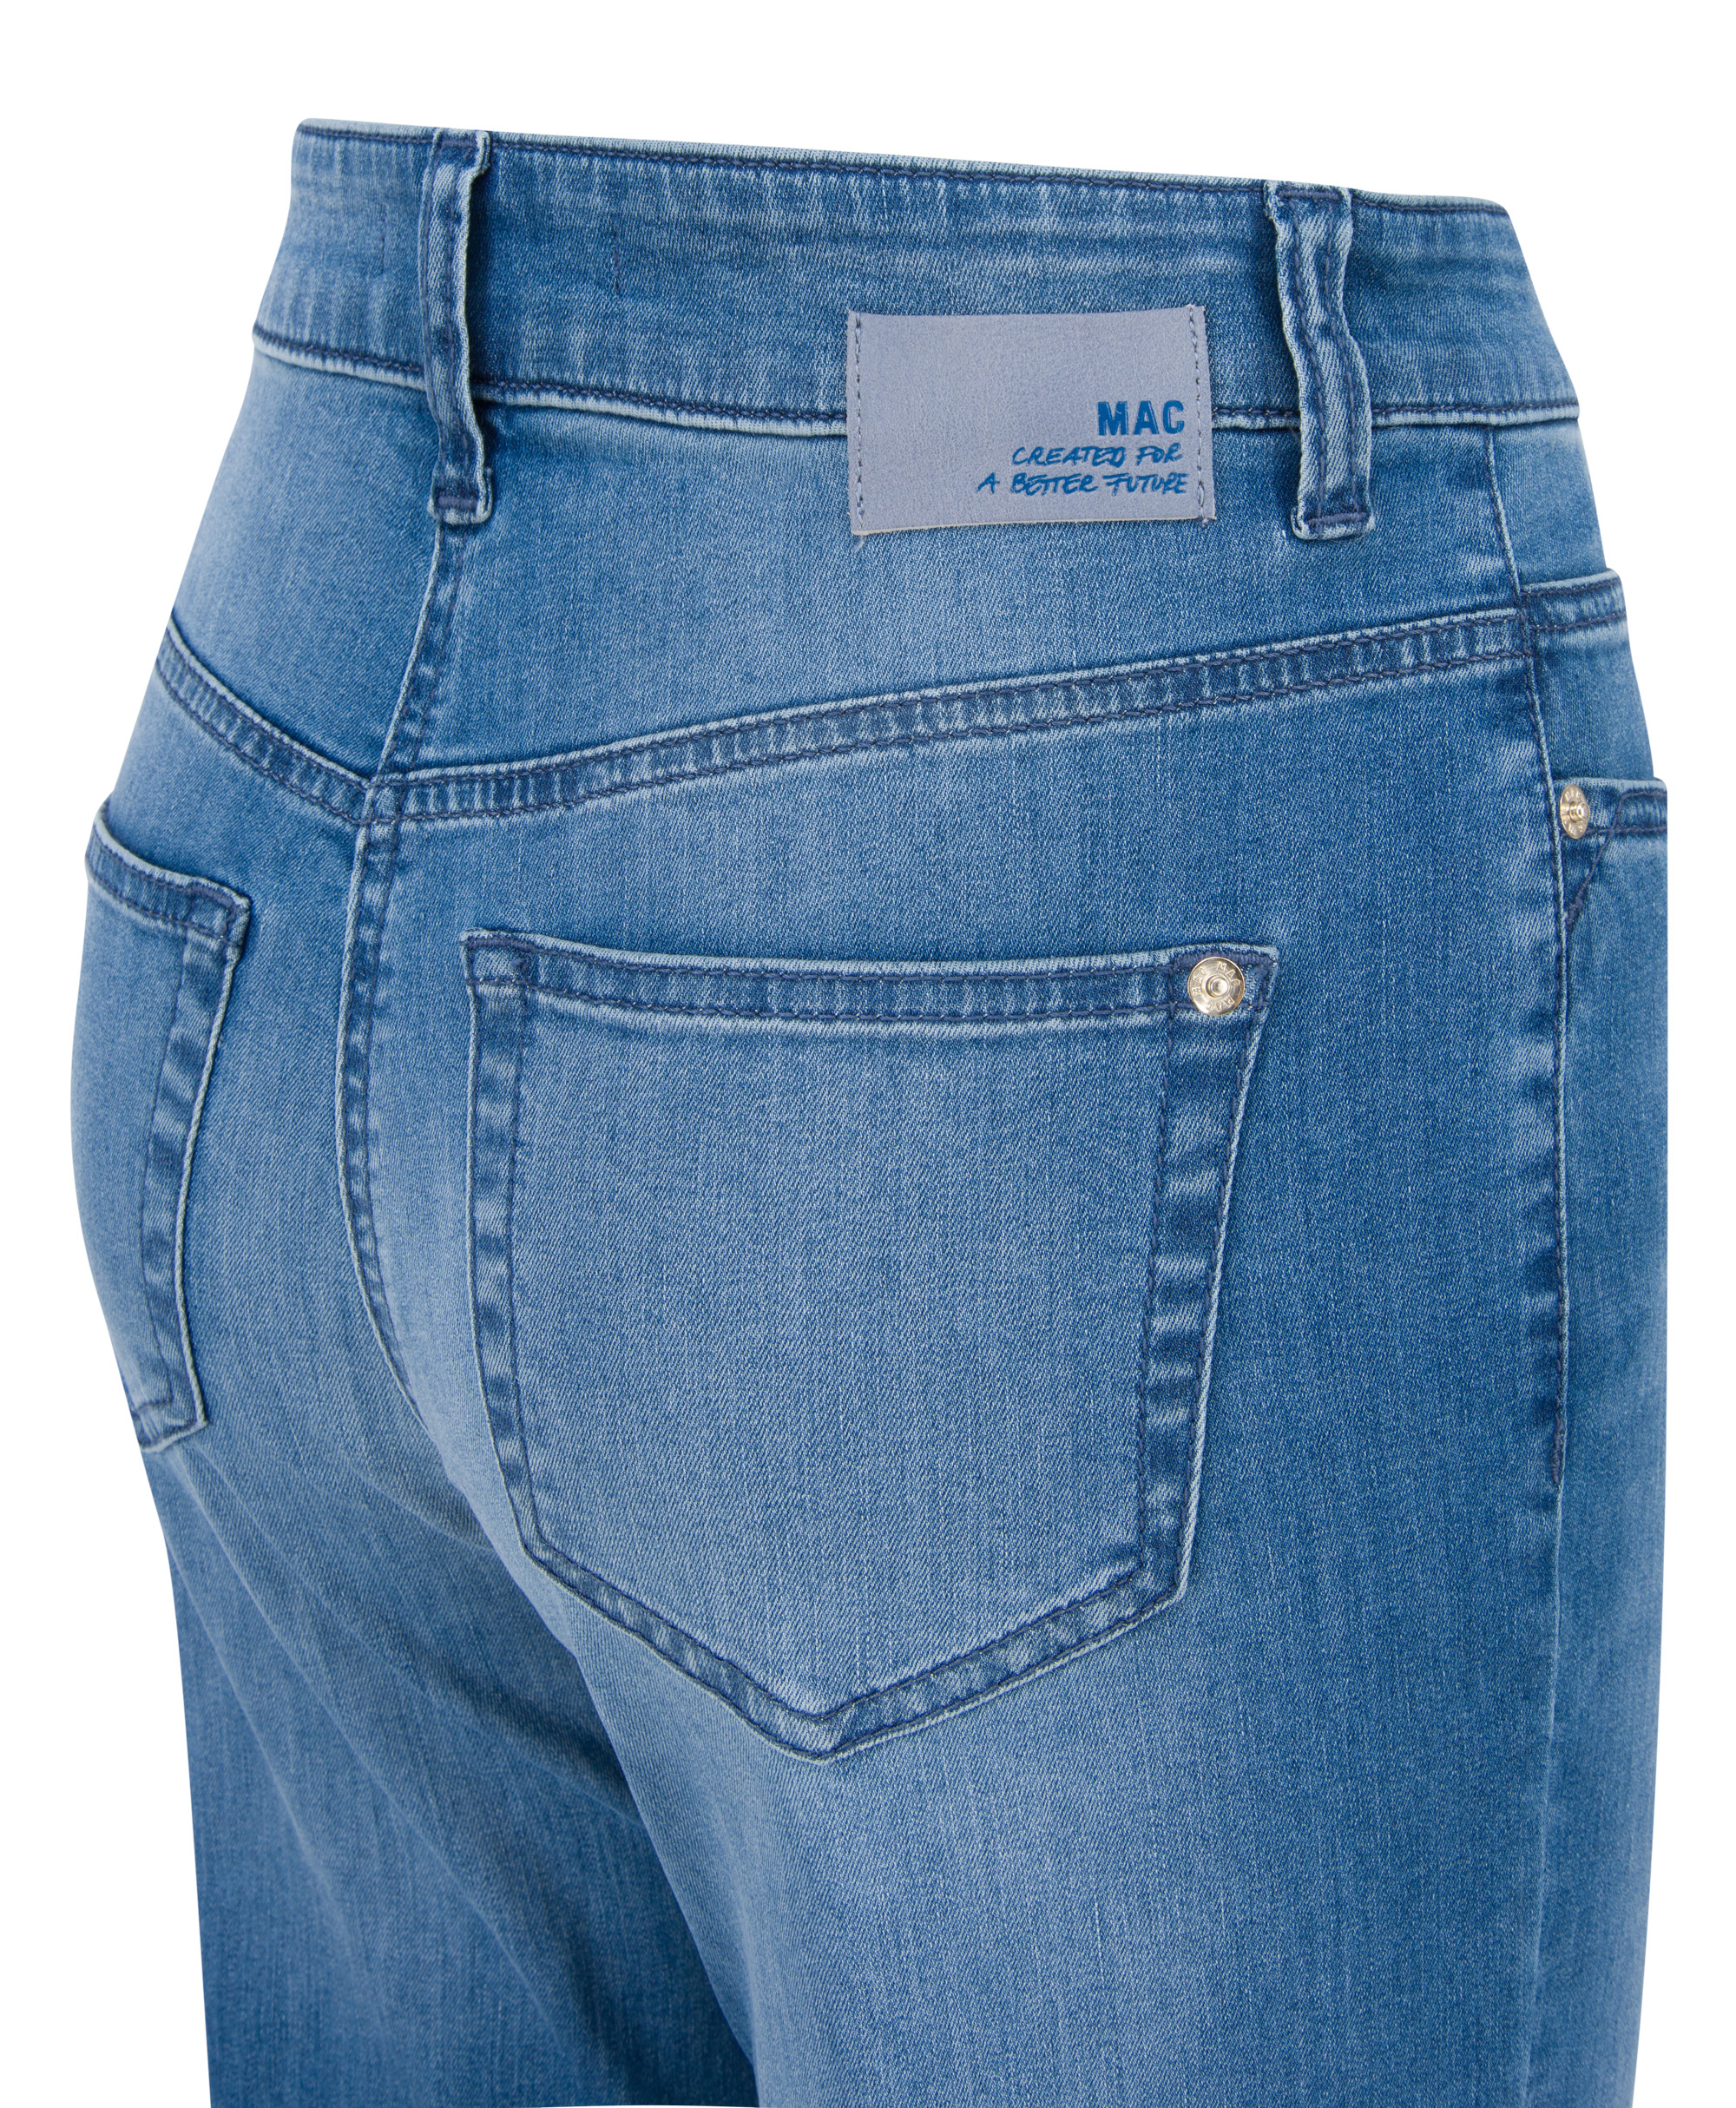 MAC STELLA mid blue wash Damen Stretch Jeans 5100-90-0392 D452 